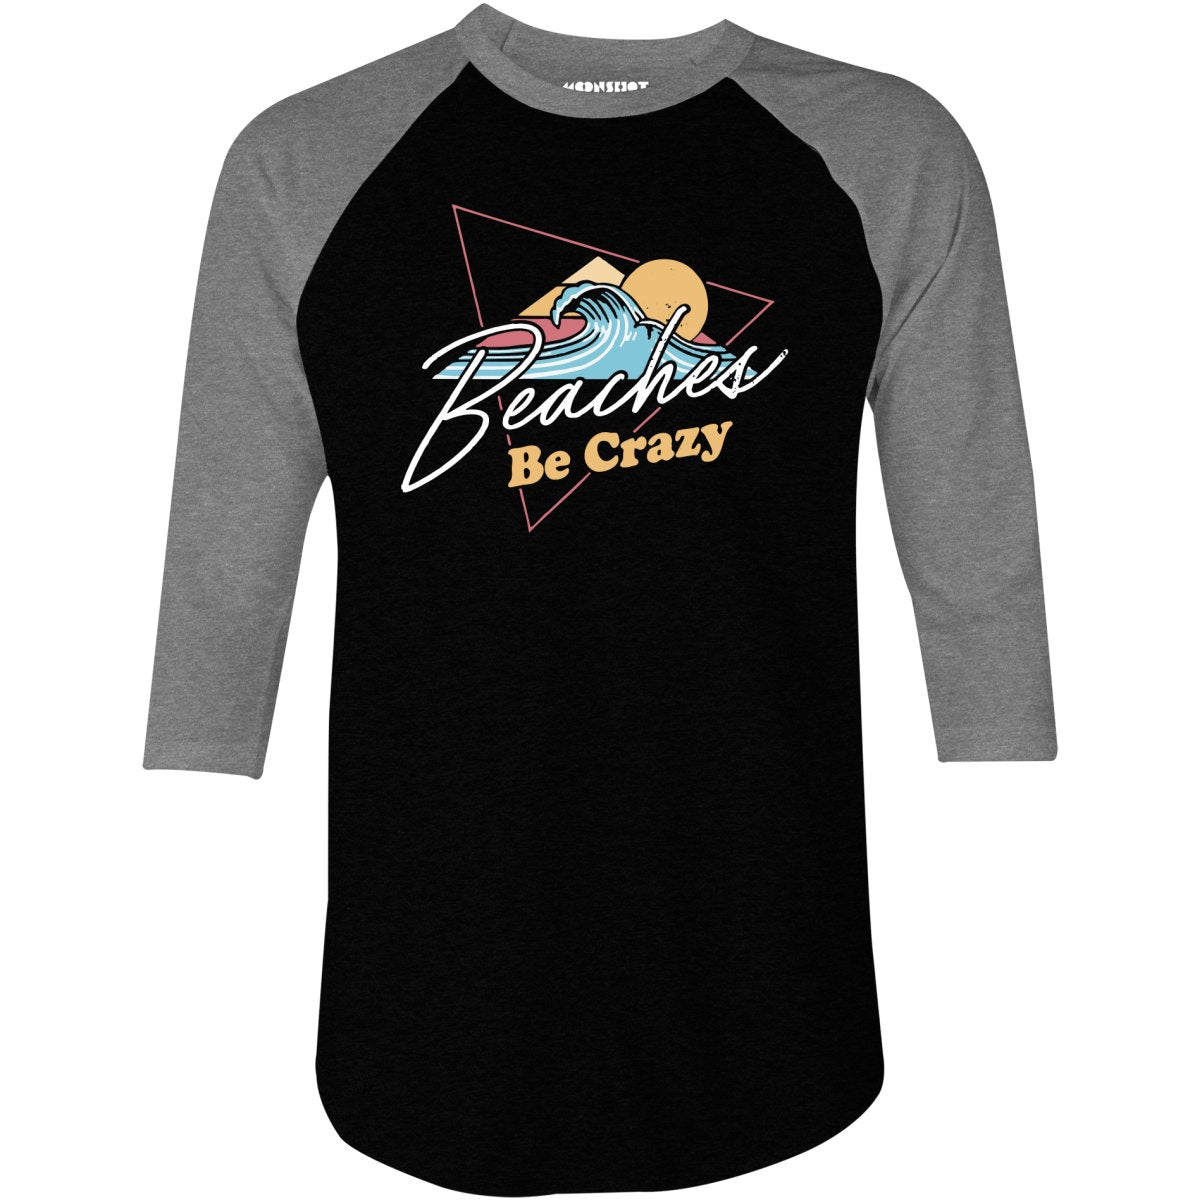 Beaches Be Crazy - 3/4 Sleeve Raglan T-Shirt